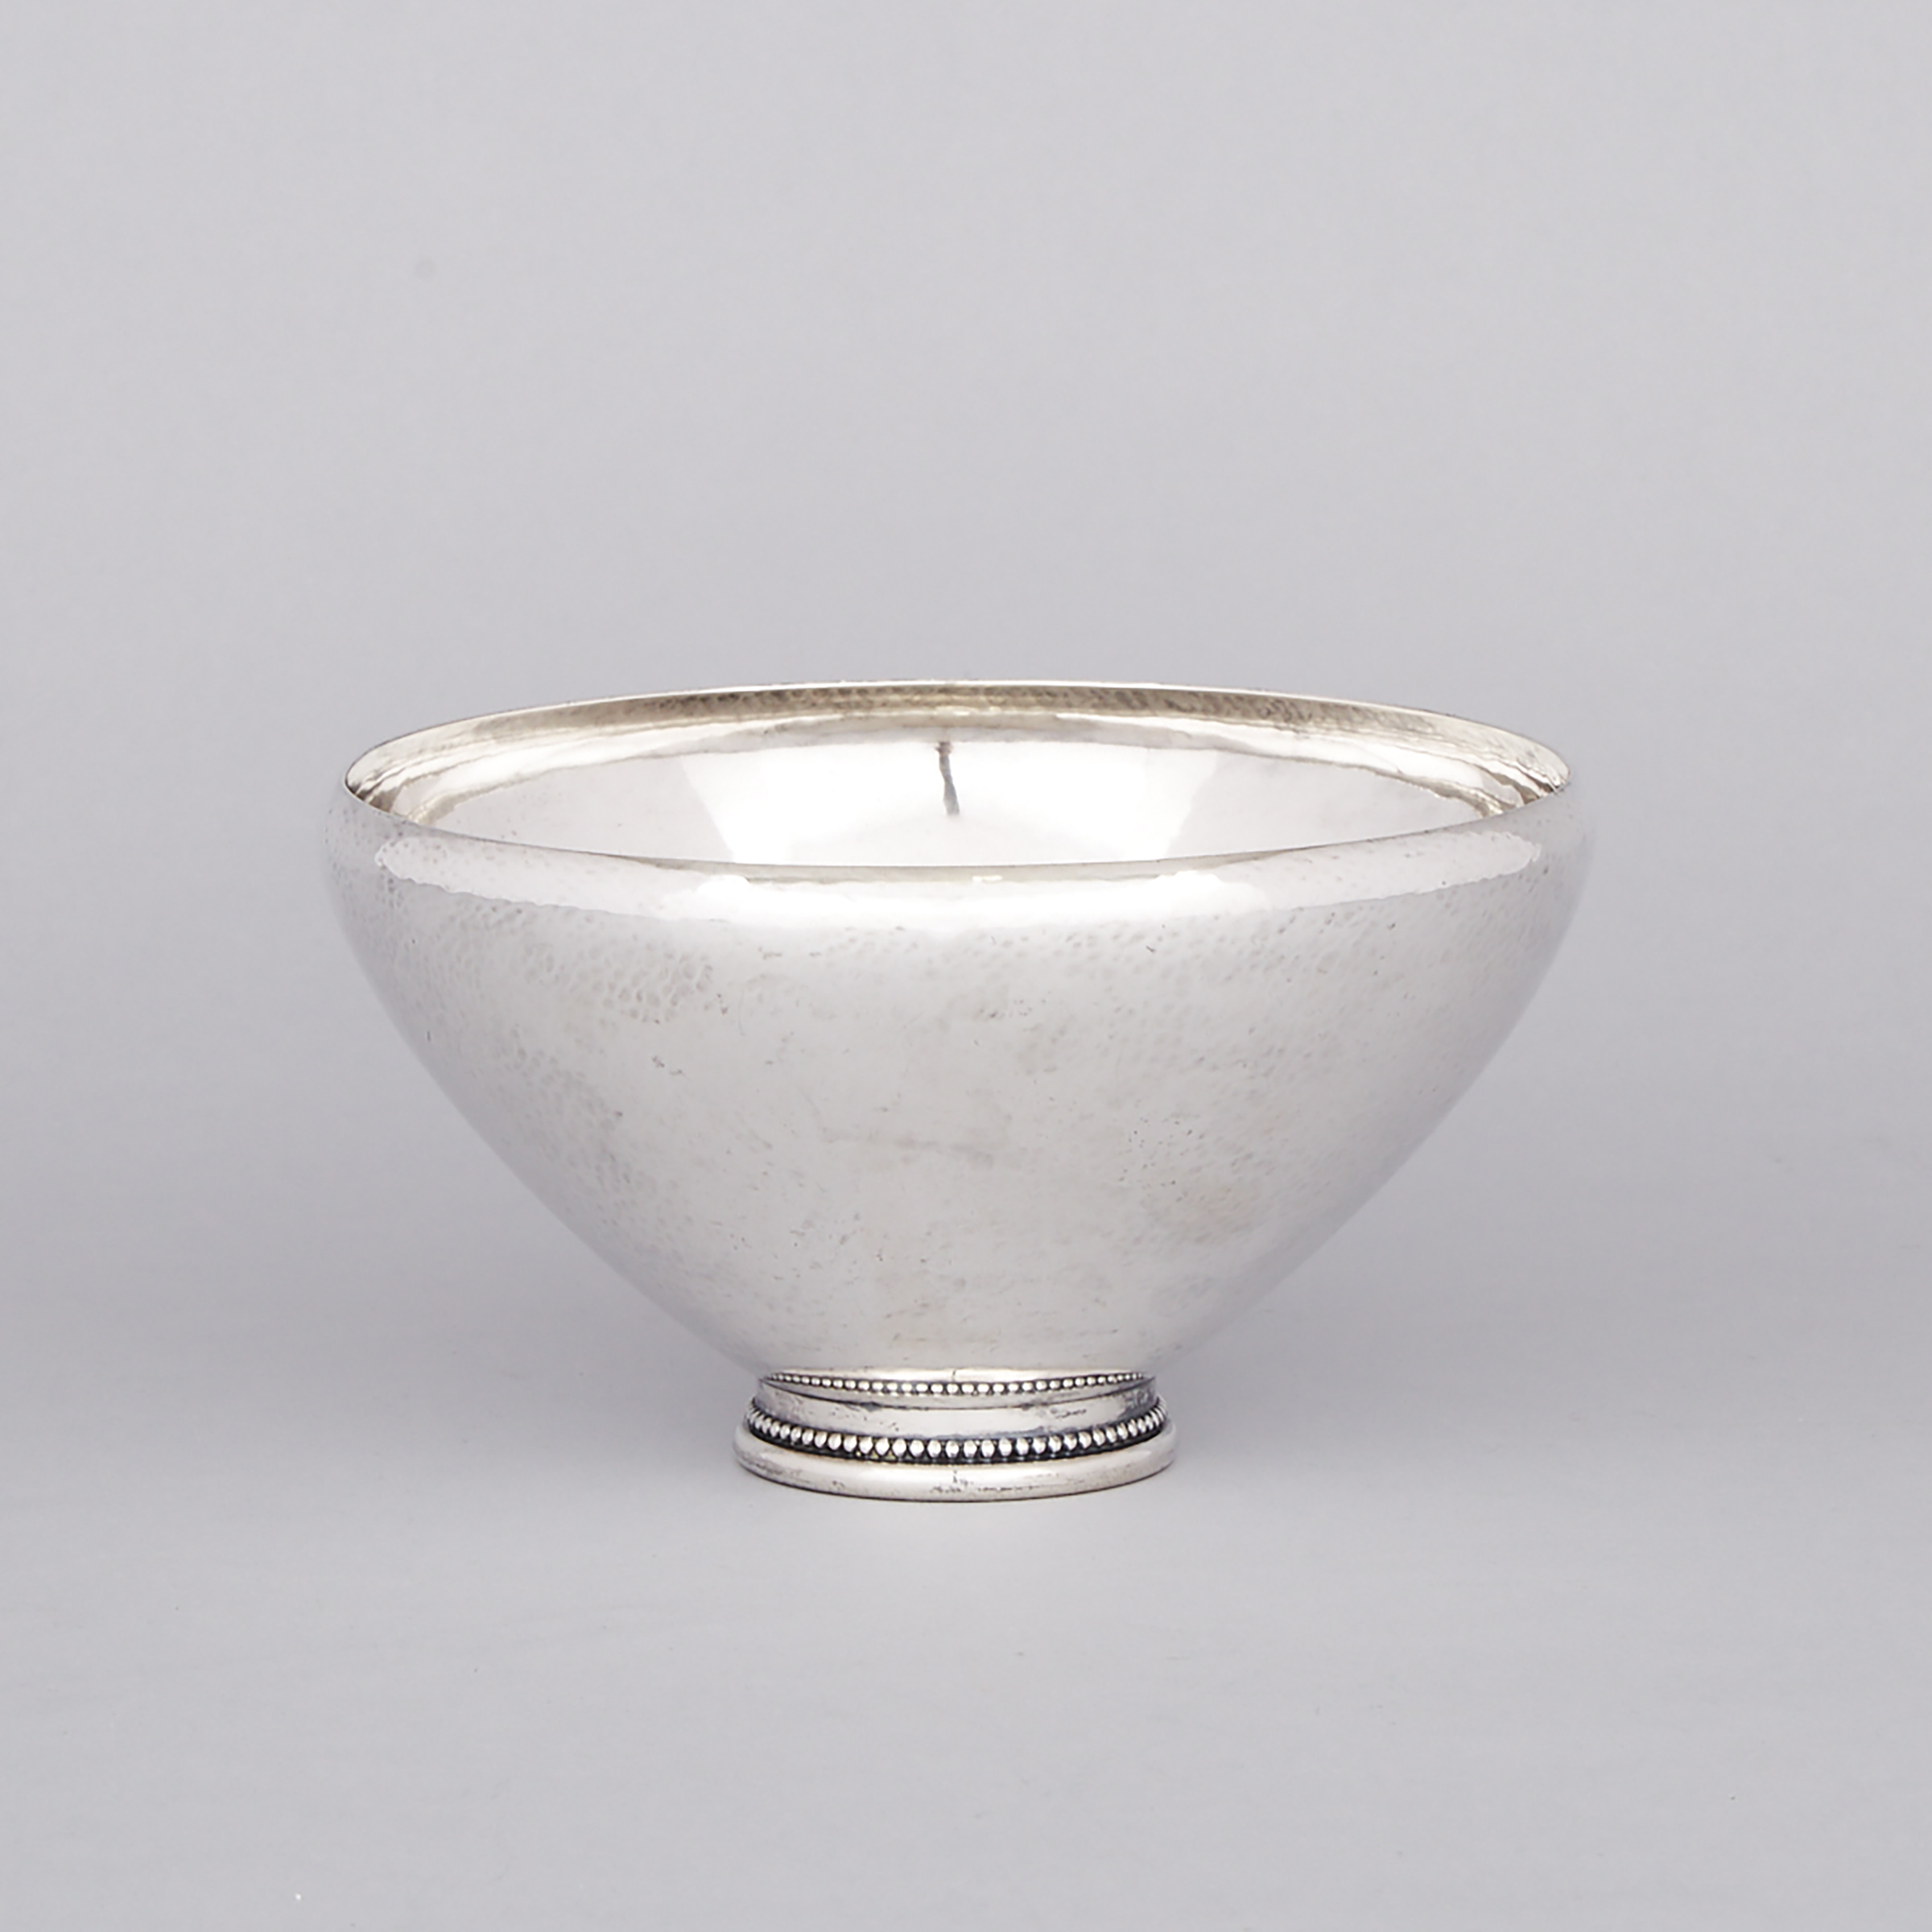 Danish Silver Bowl, #461A, Georg Jensen, Copenhagen, post-1945